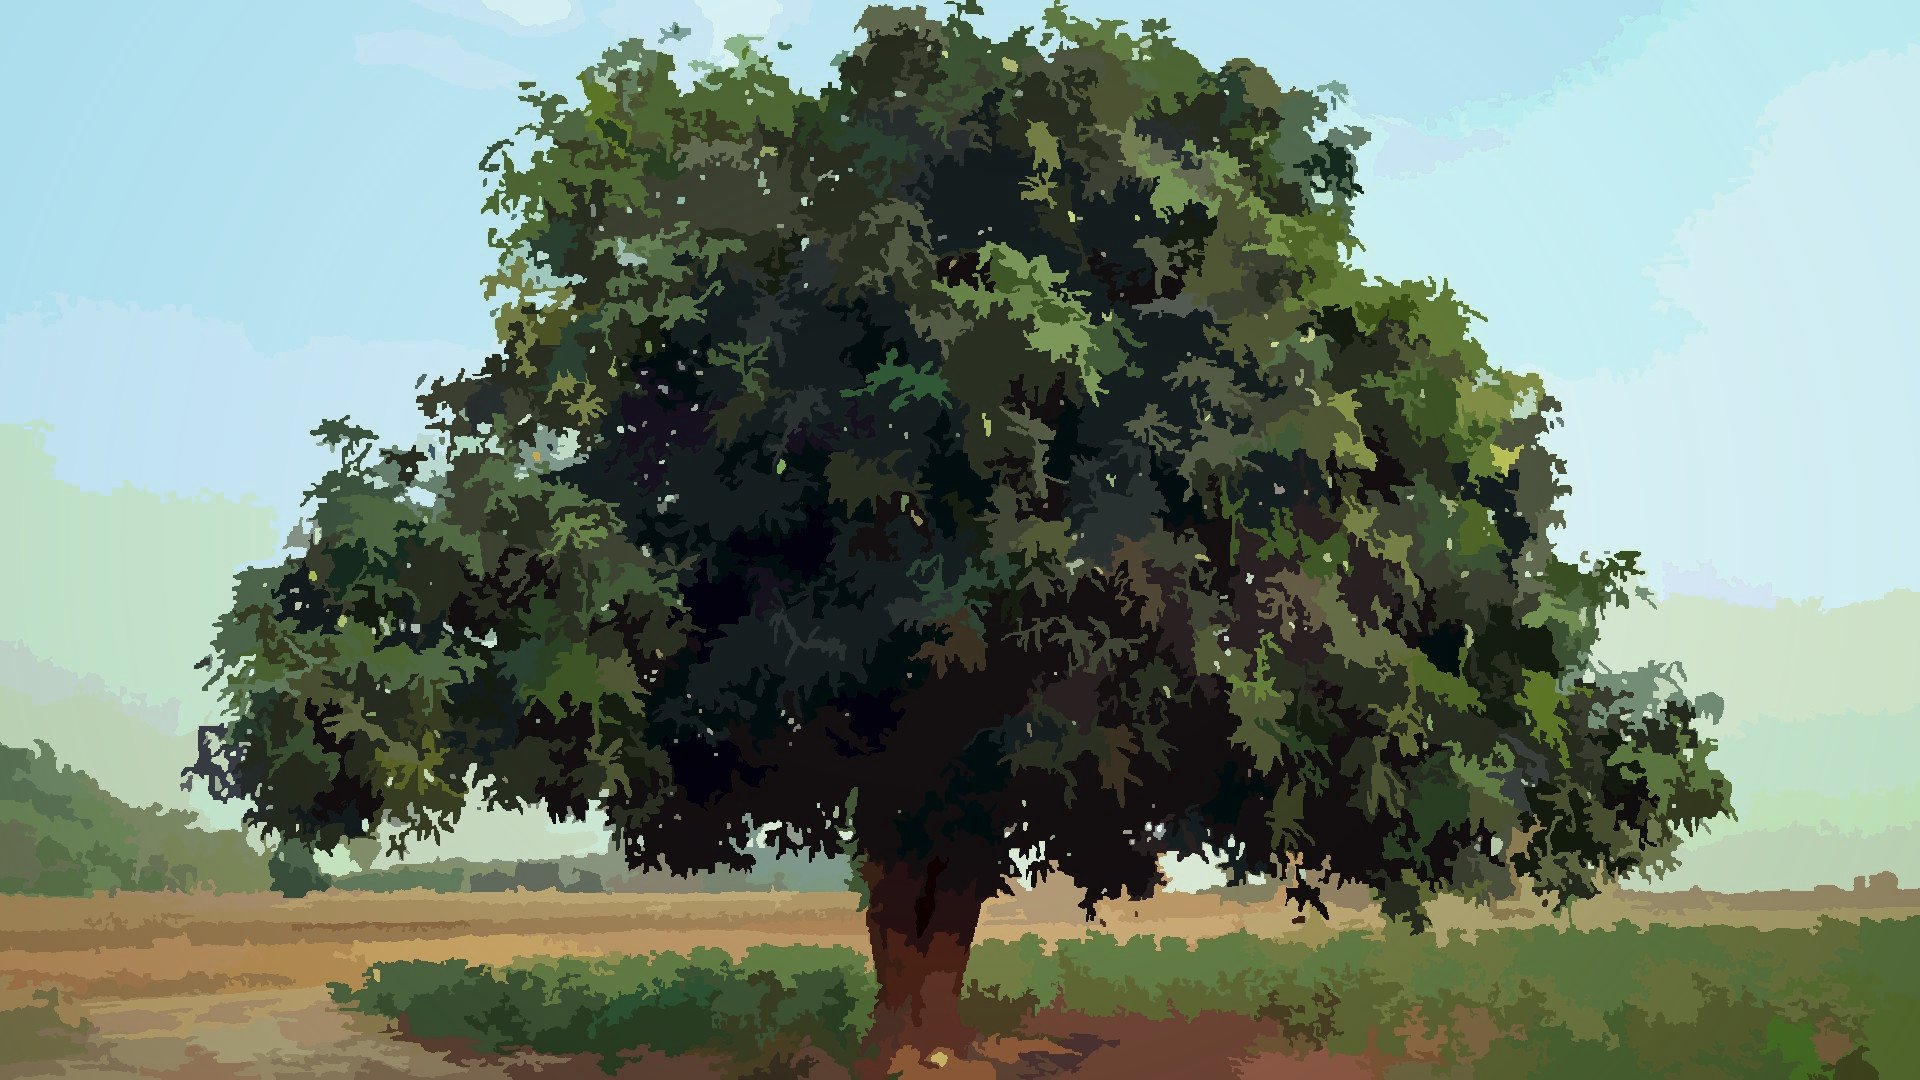 A mango tree